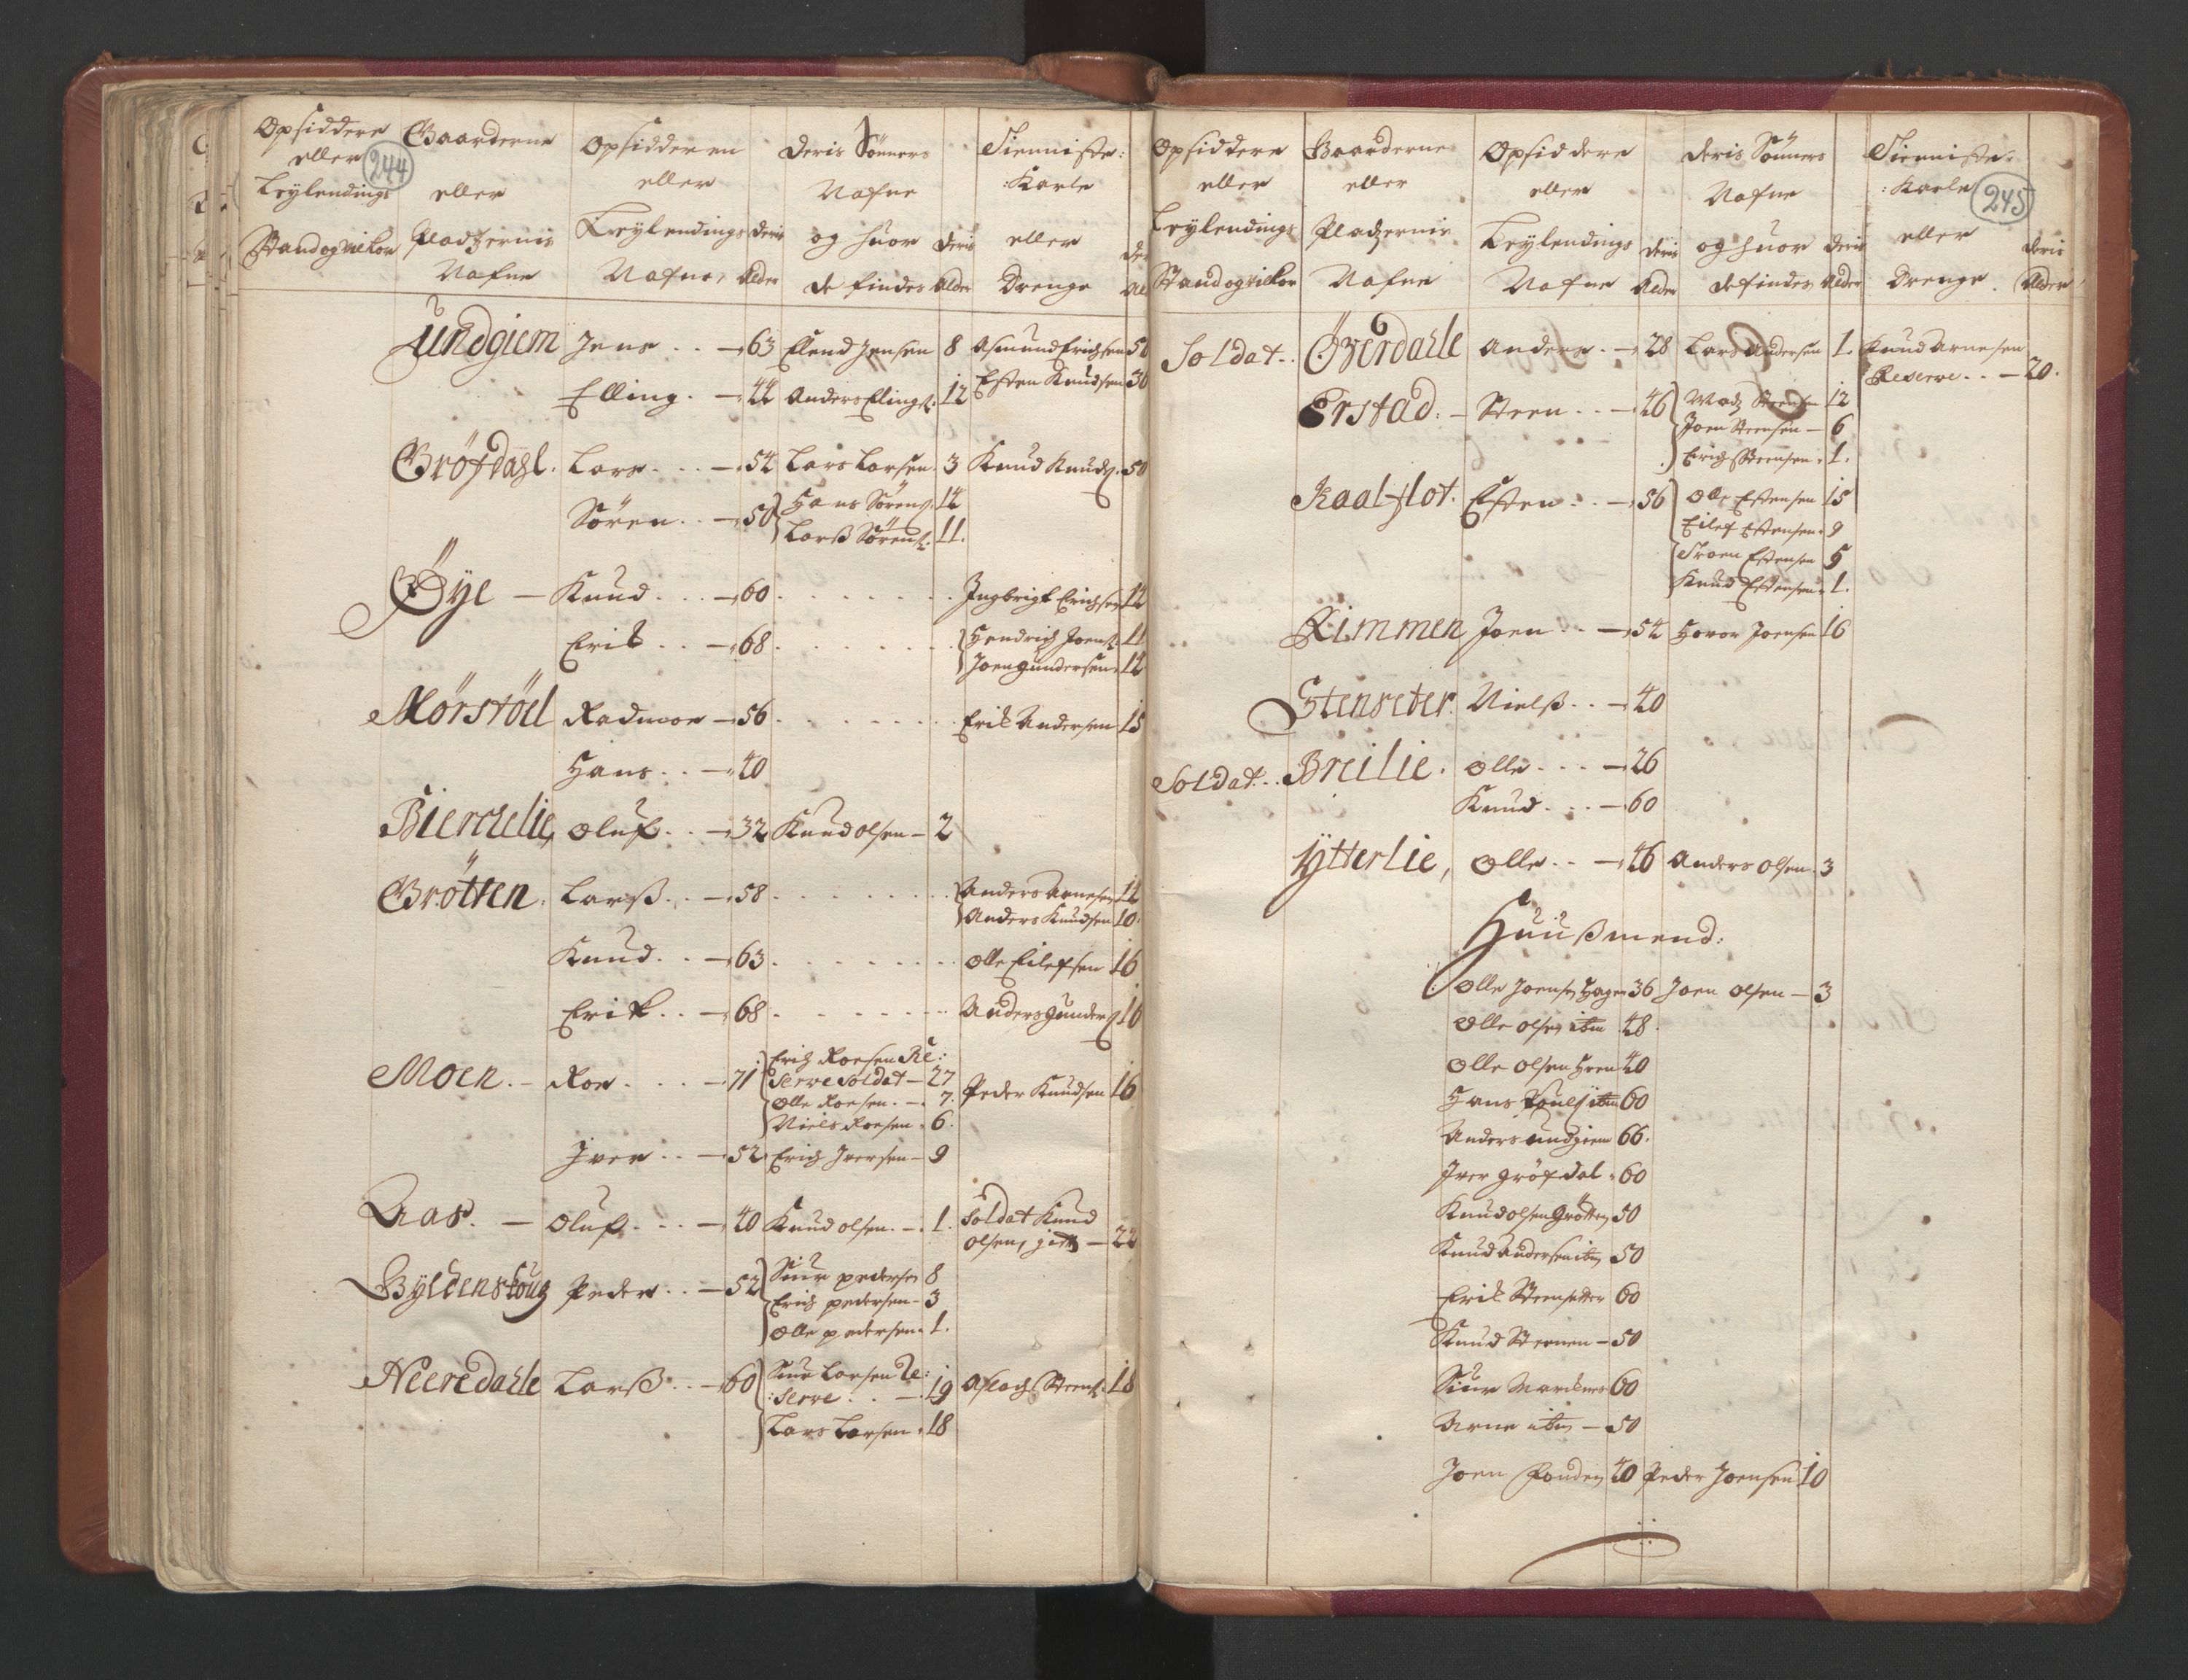 RA, Manntallet 1701, nr. 11: Nordmøre fogderi og Romsdal fogderi, 1701, s. 244-245